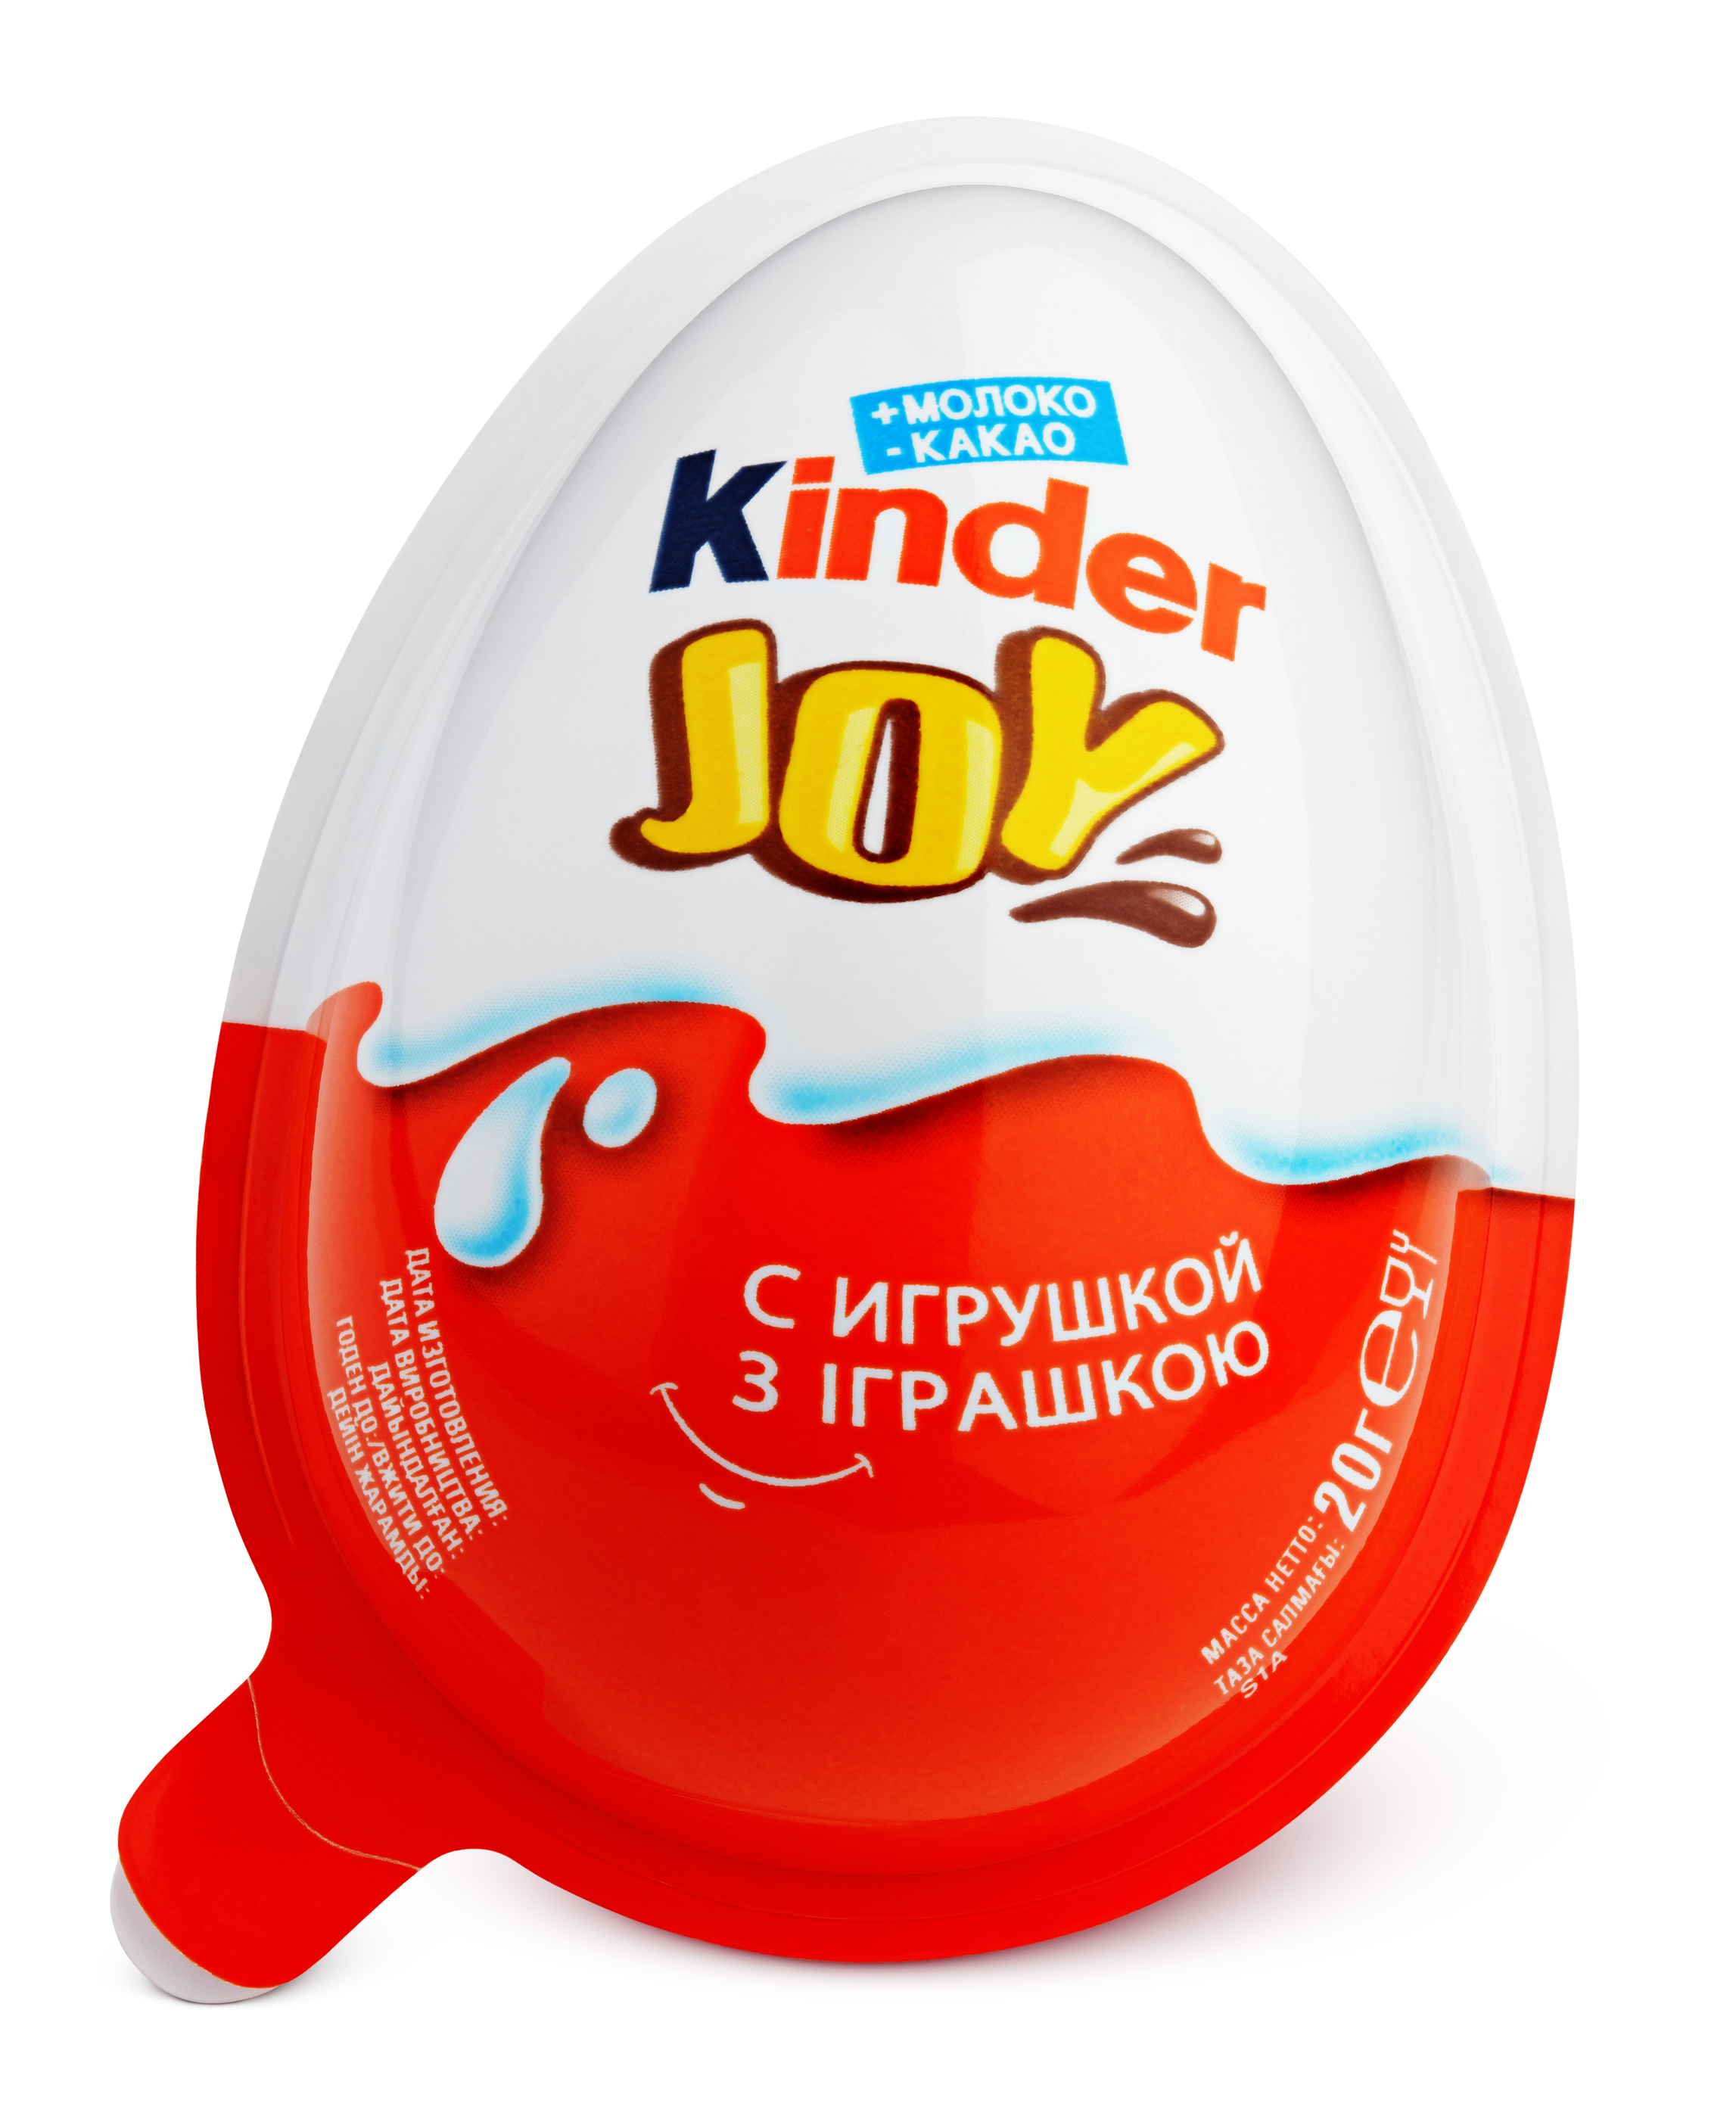 kinder joy eggs illegal